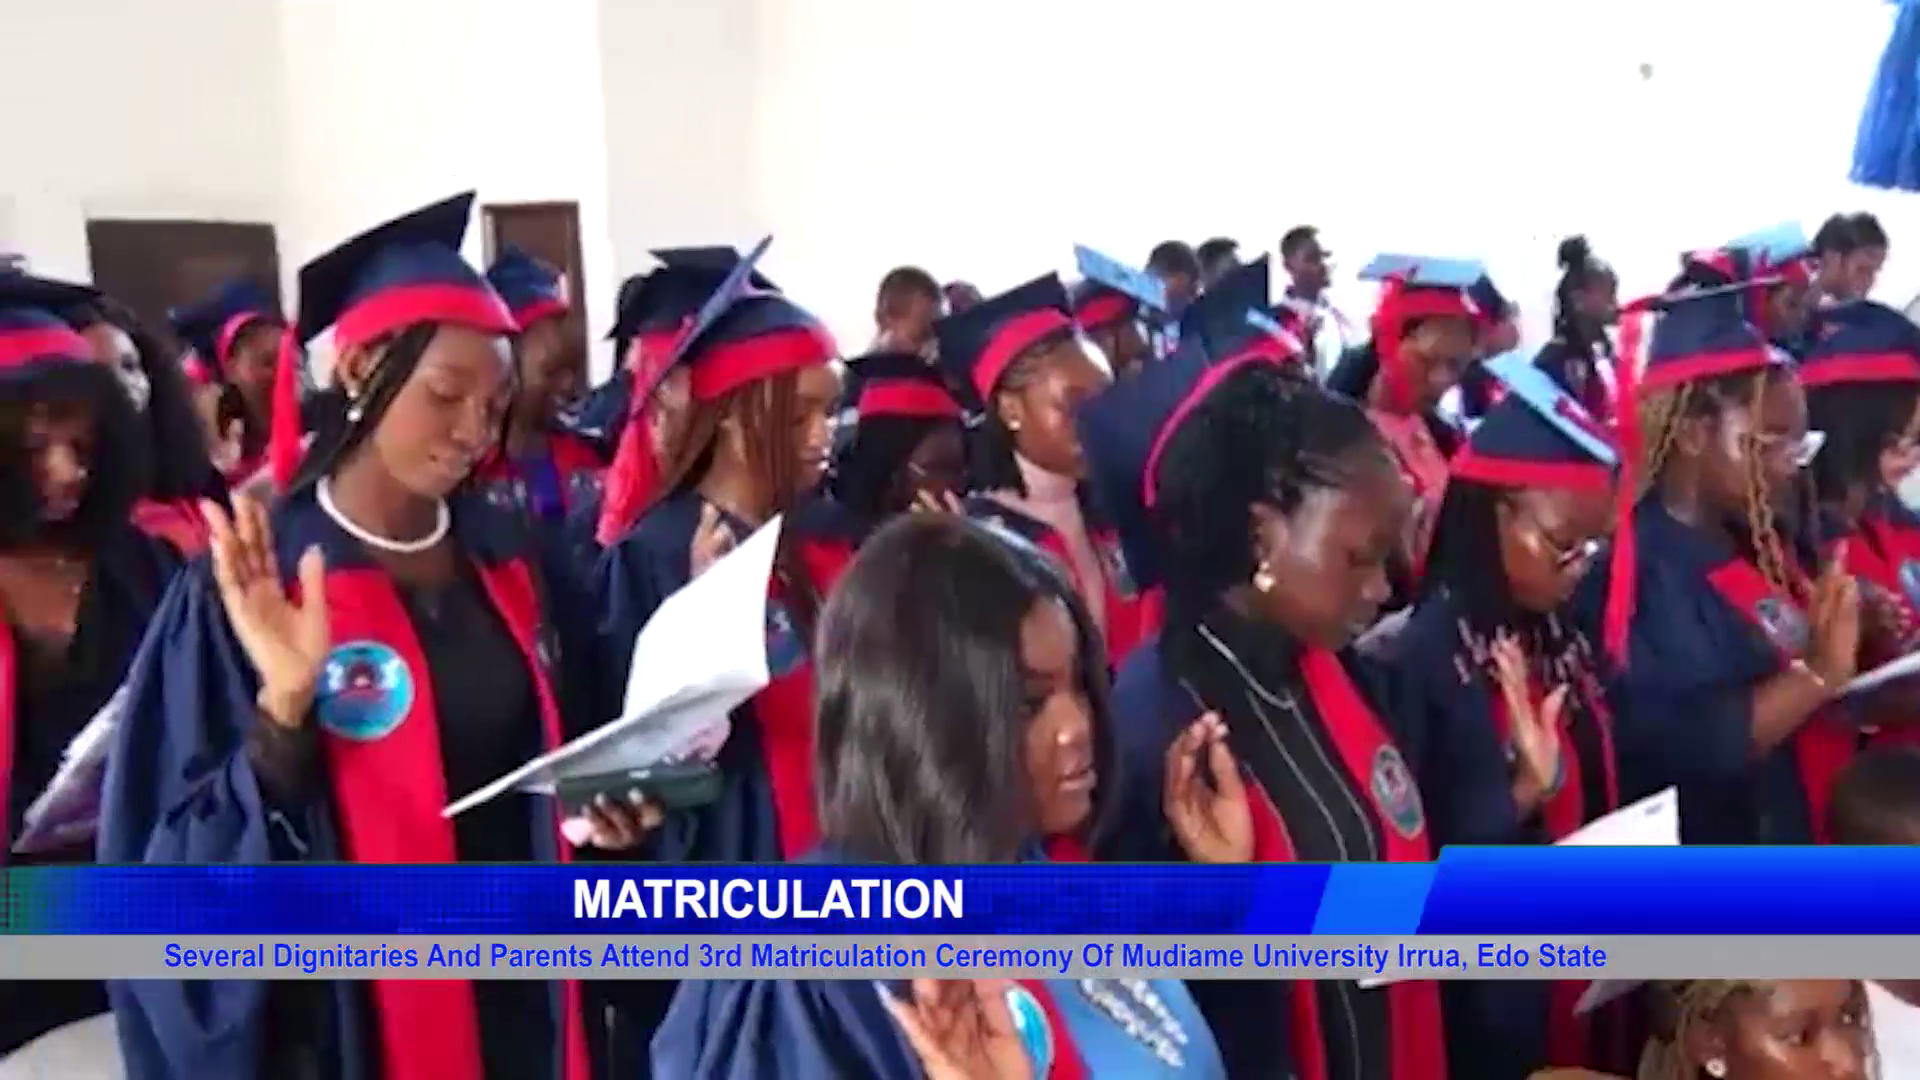 Several Dignitaries And Parents Attend 3rd Matriculation Ceremony Of Mudiame University Irrua, Edo State